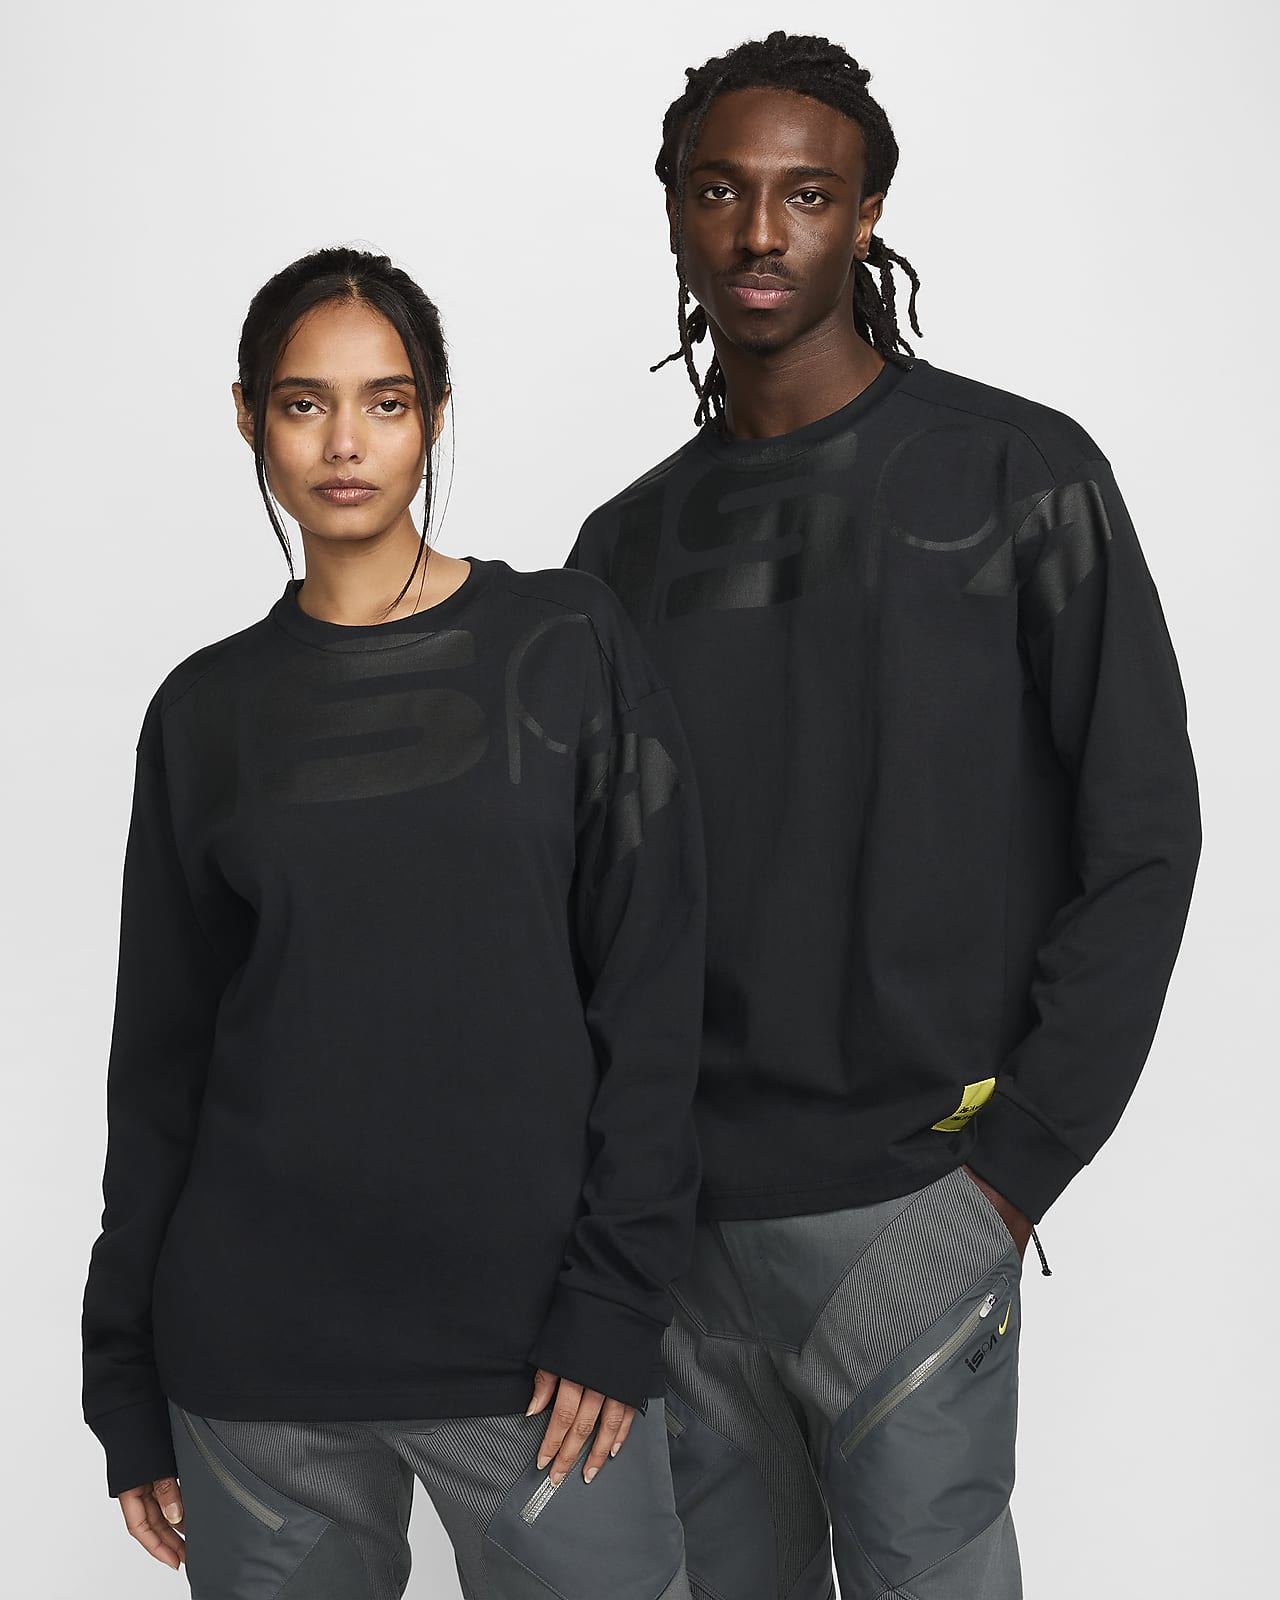 Nike ISPA Long-Sleeved Top